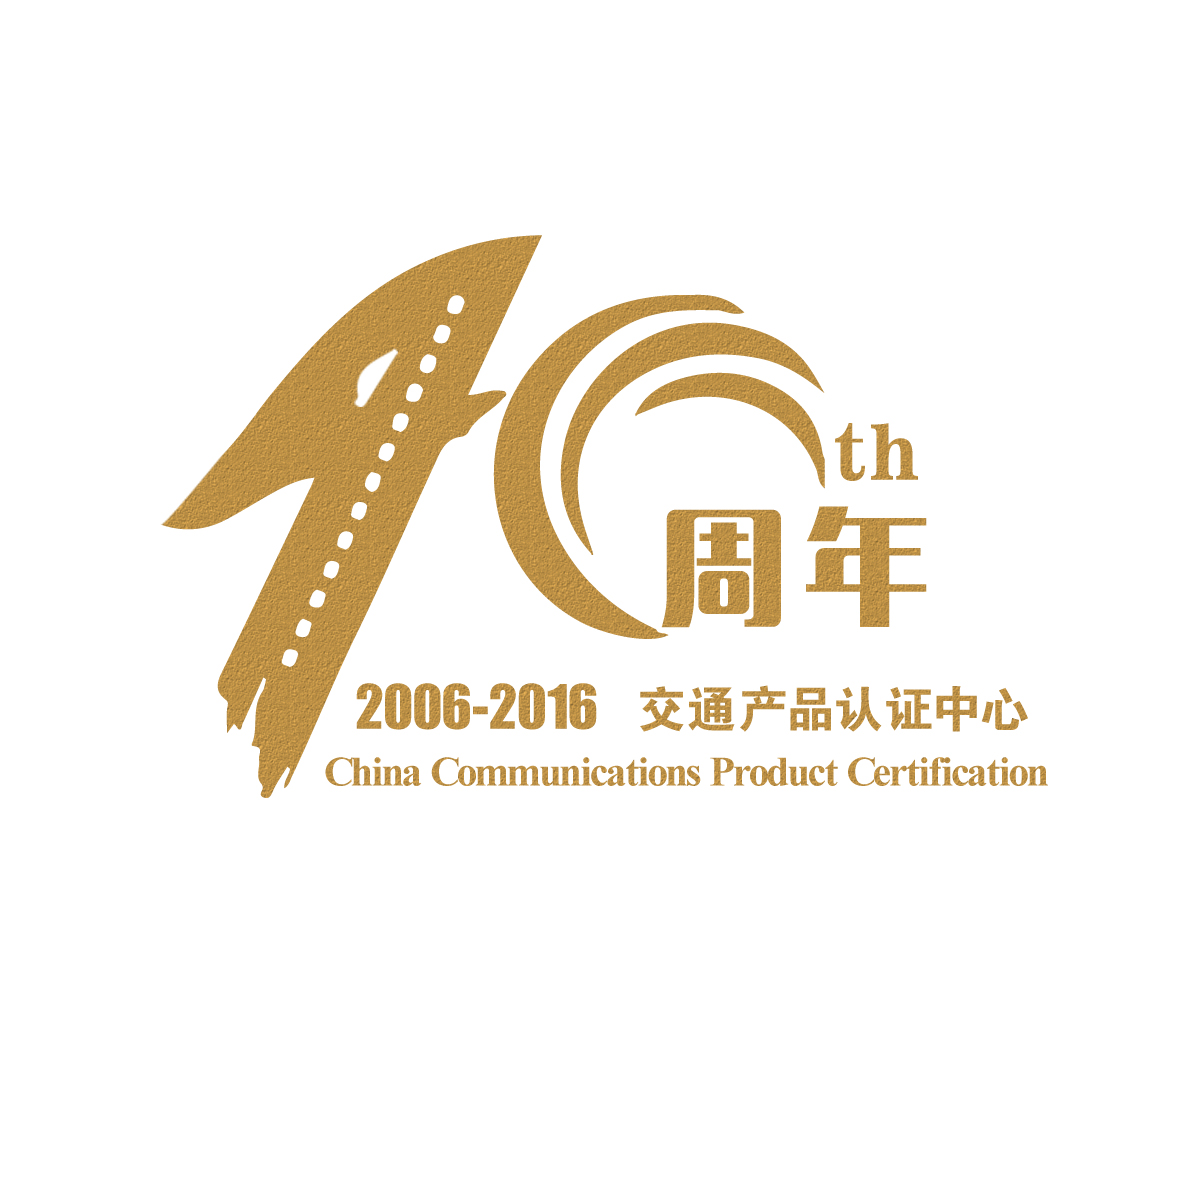 十周年logo